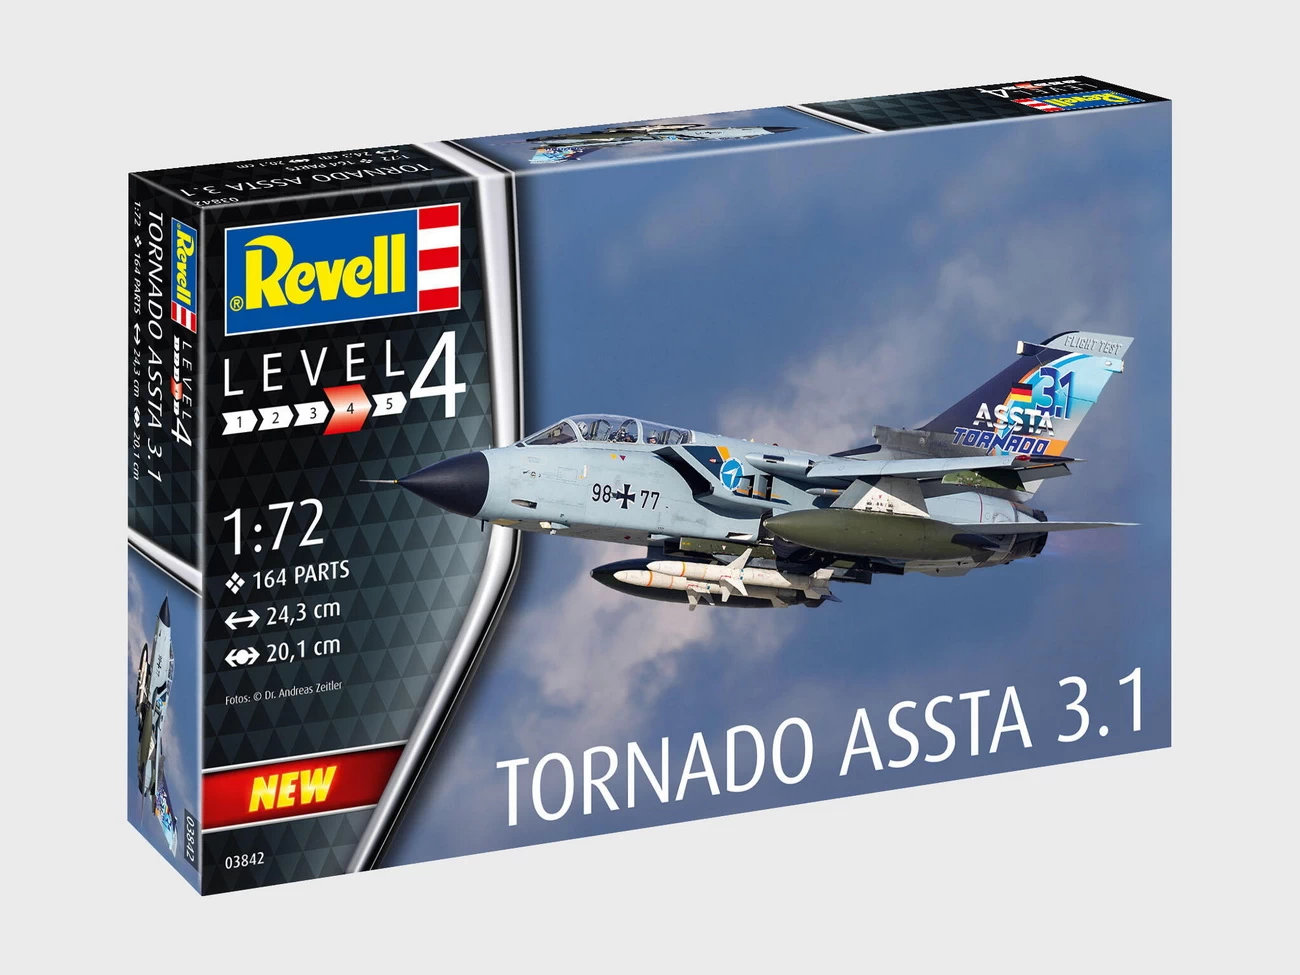 Revell 03842 - Tornado ASSTA 3.1